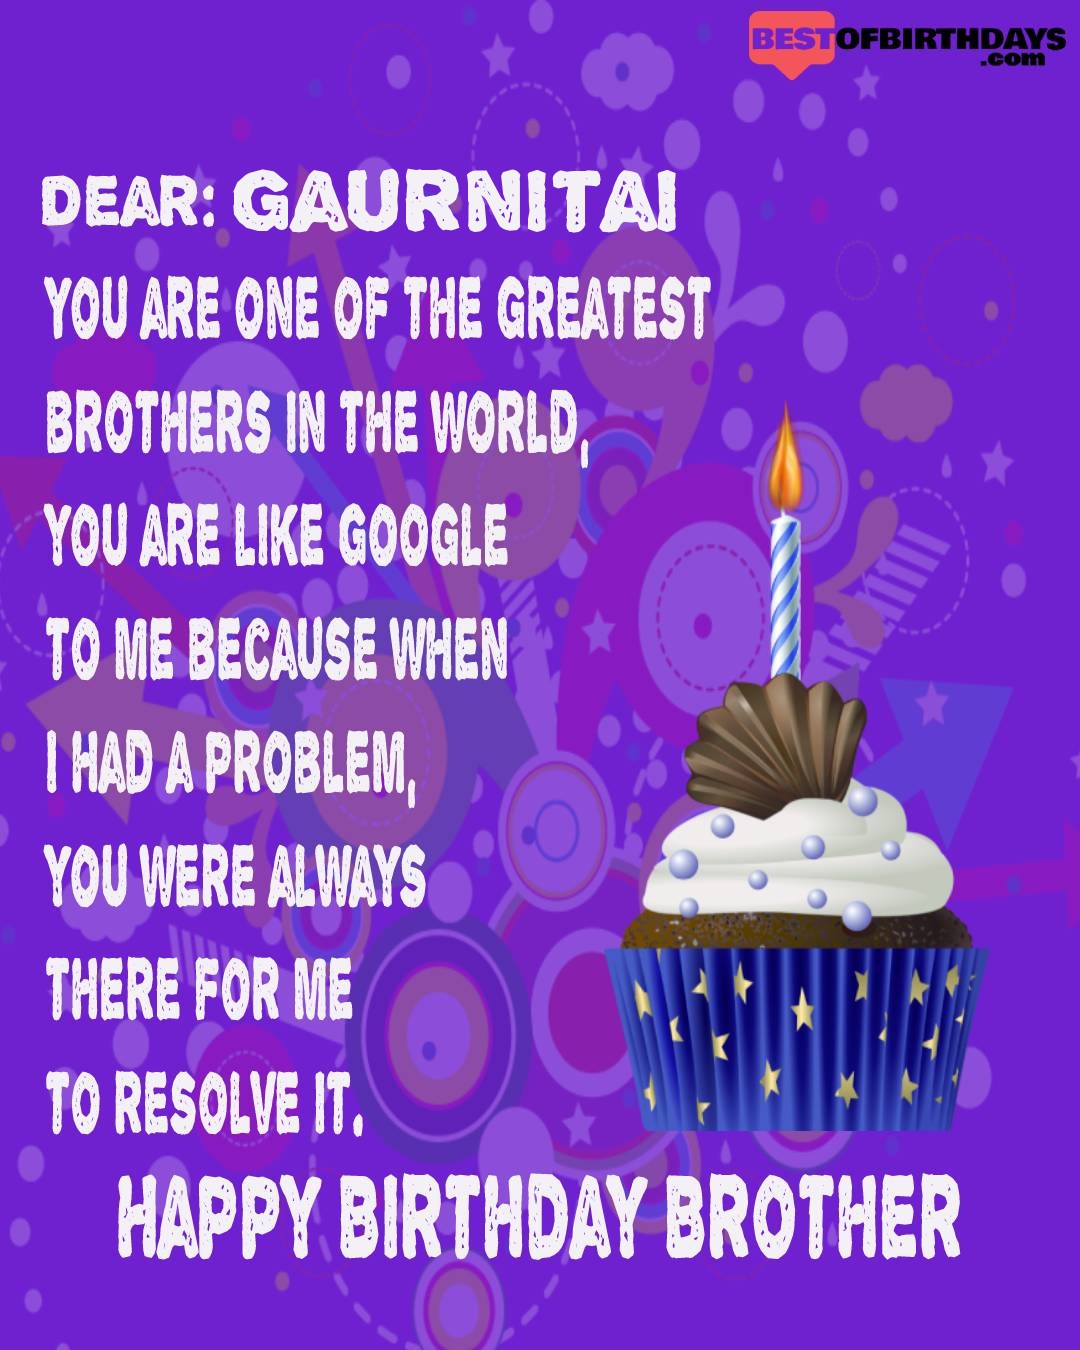 Happy birthday gaurnitai bhai brother bro